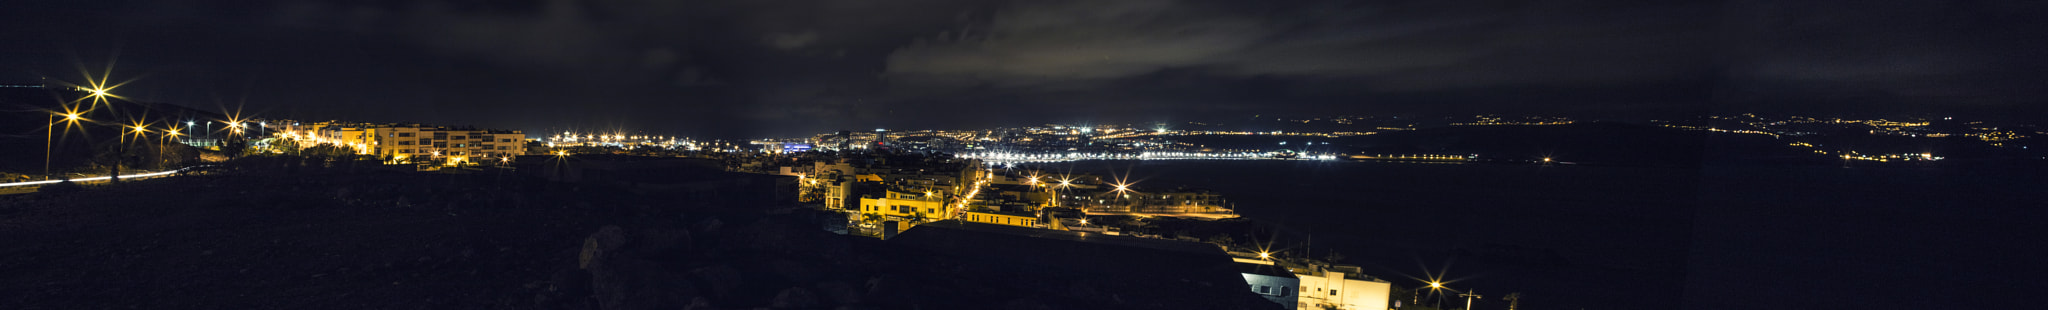 Midnight Panorama at Las Palmas de Gran Canaria